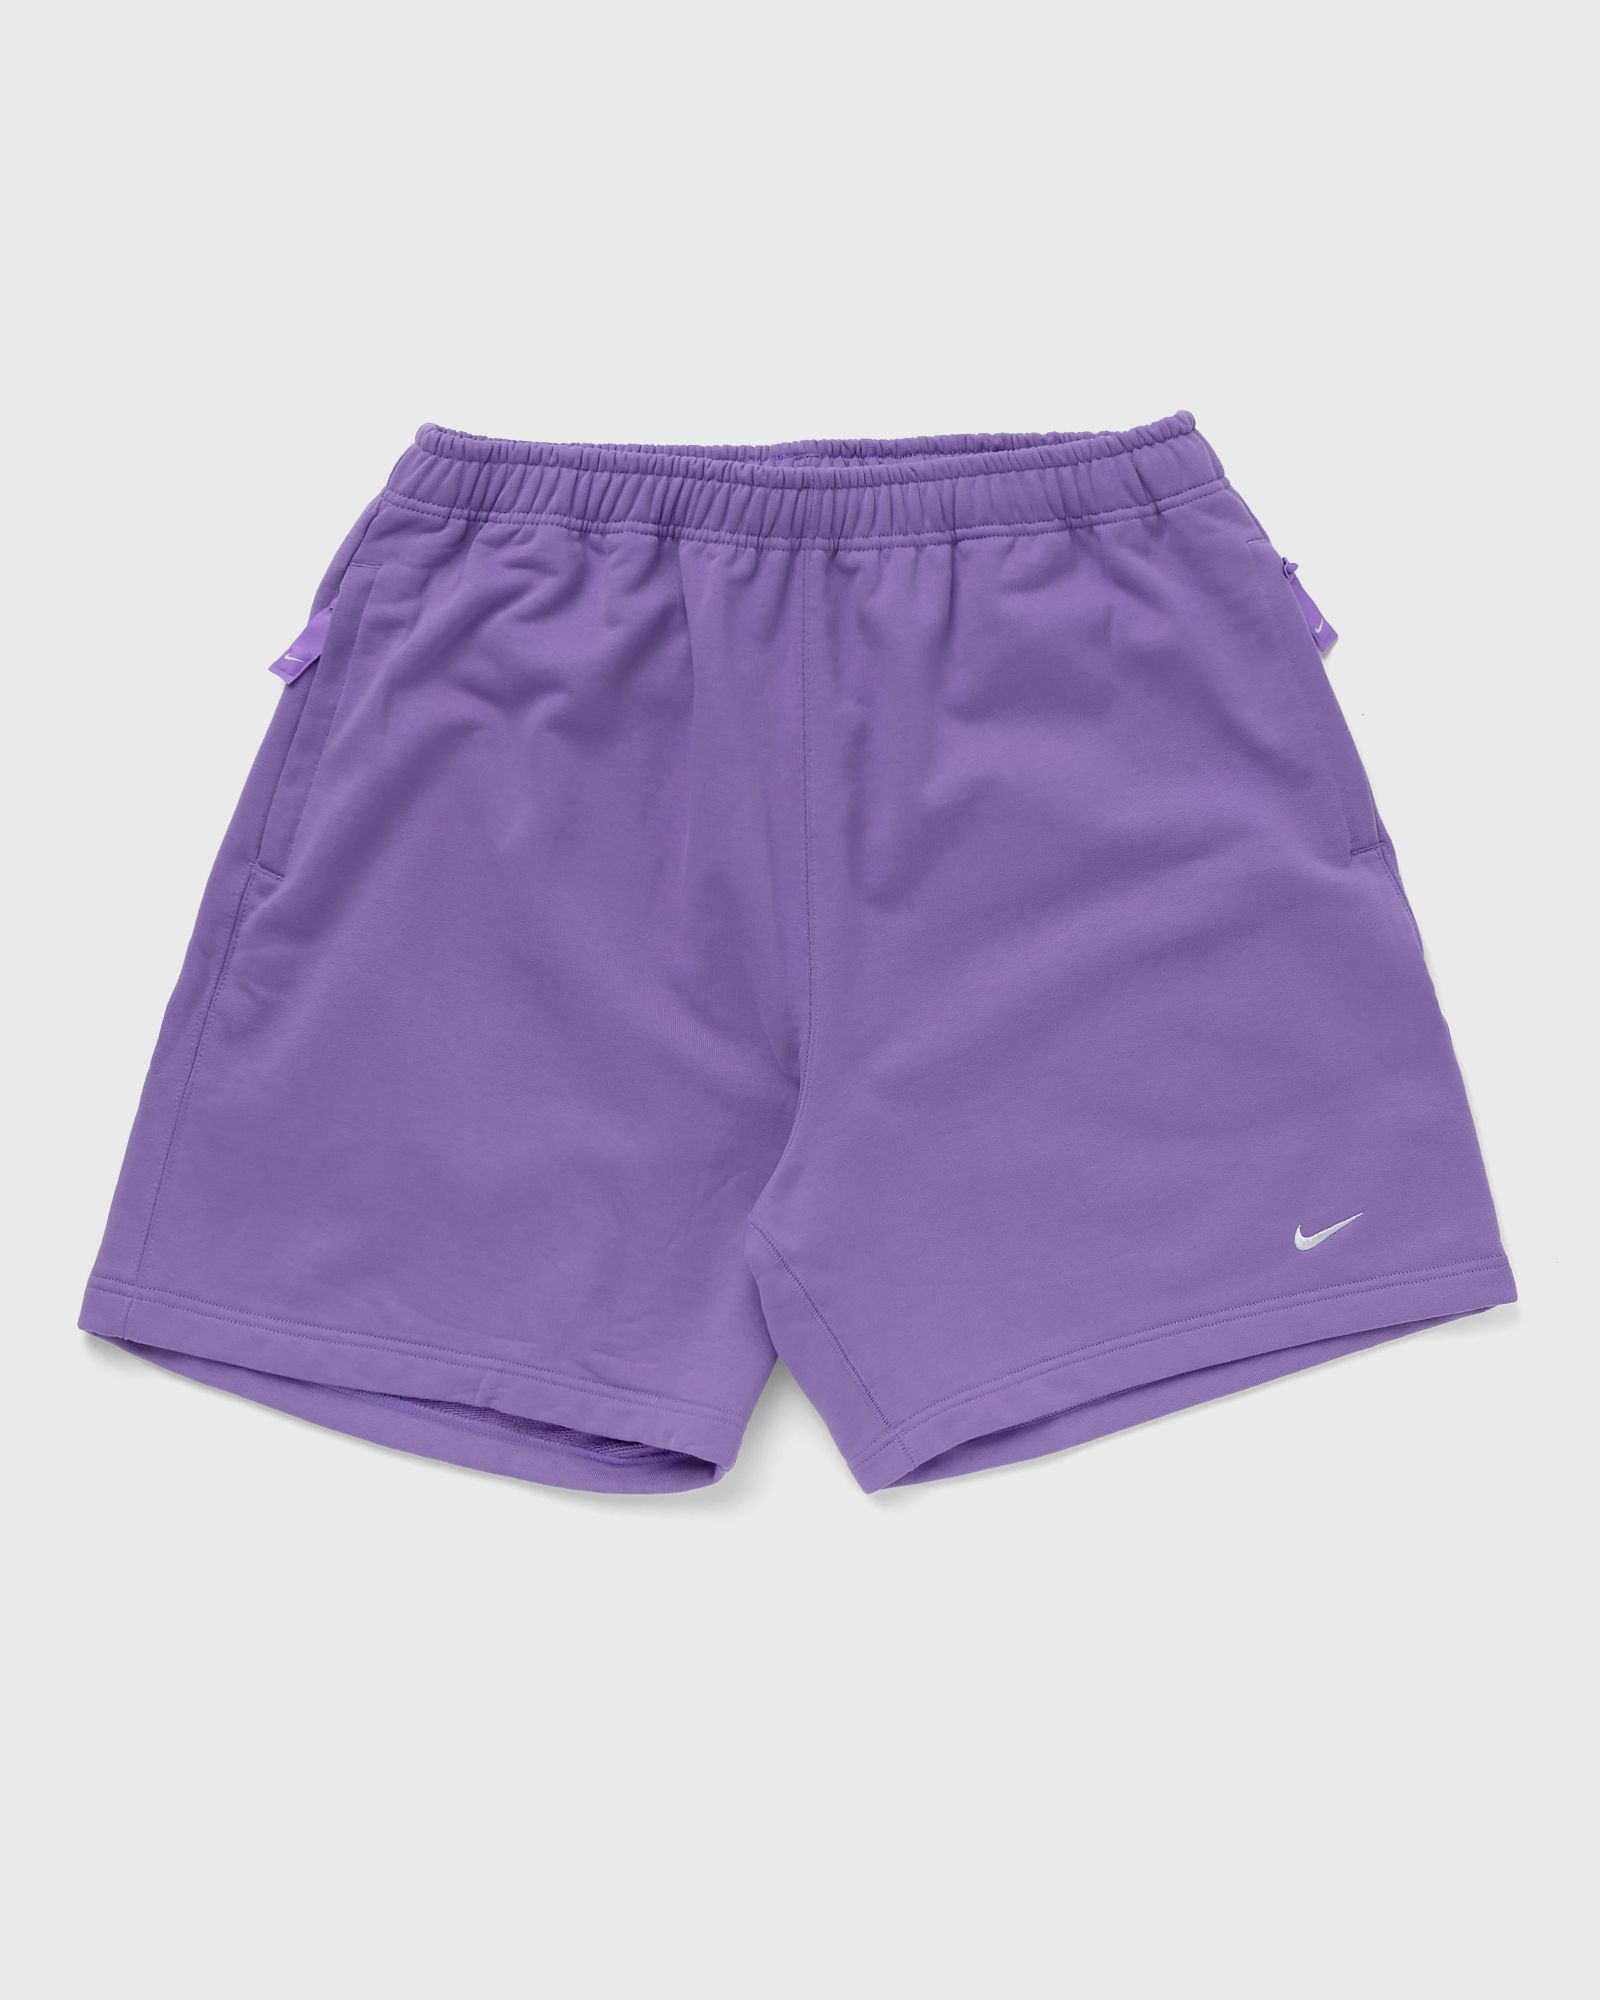 Nike - solo swoosh french terry shorts men sport & team shorts purple in größe:xl